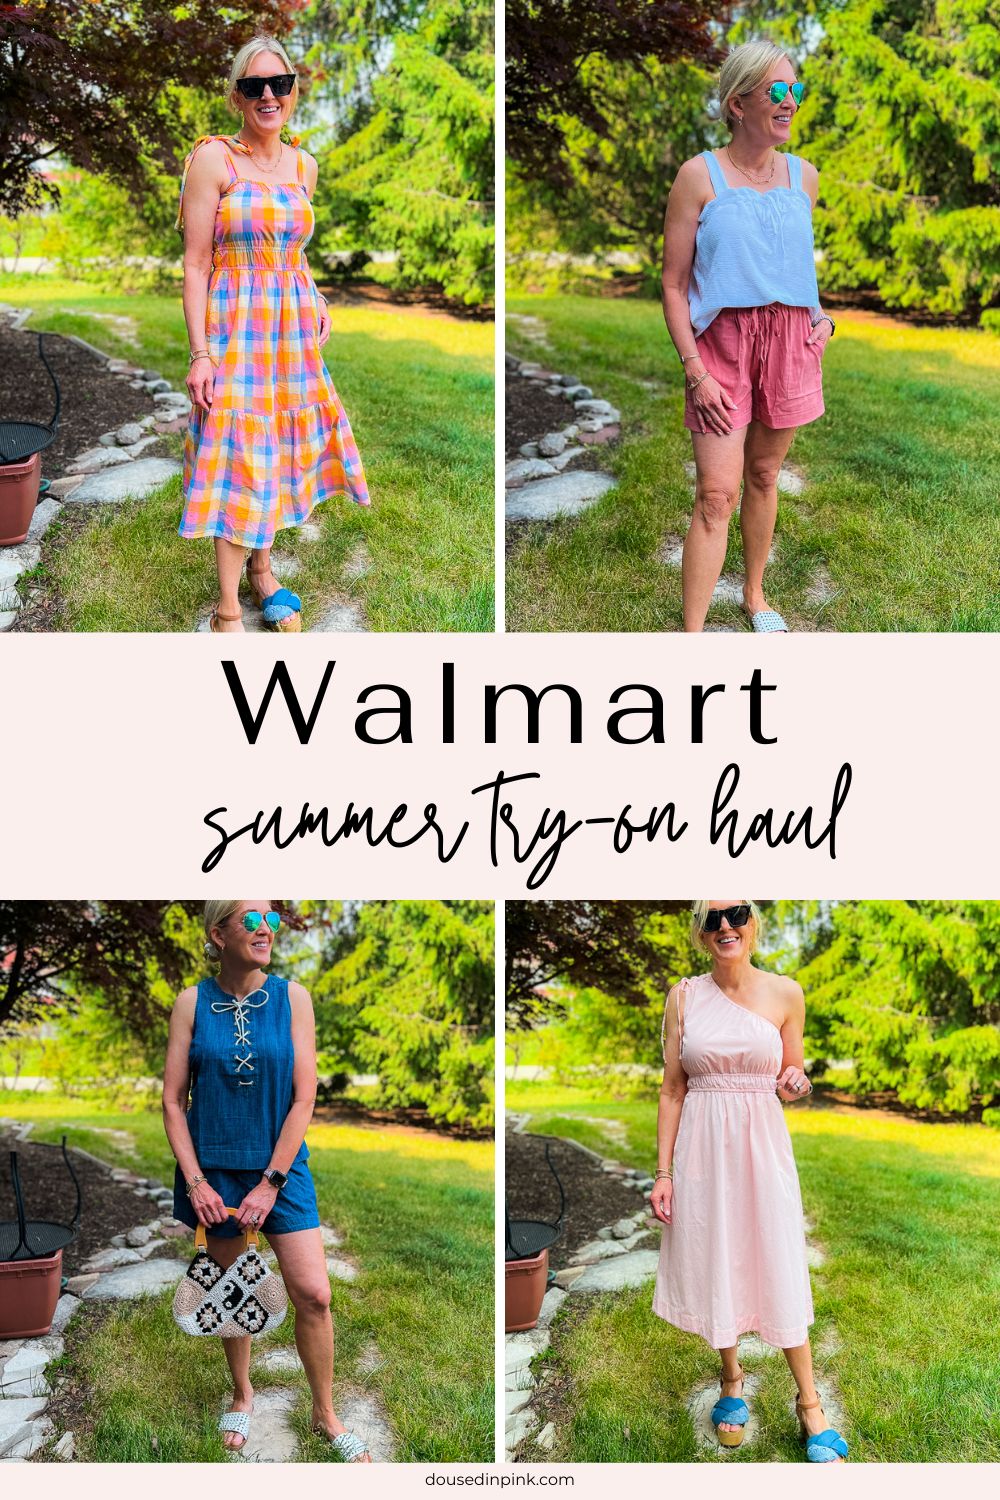 Walmart summer try-on haul